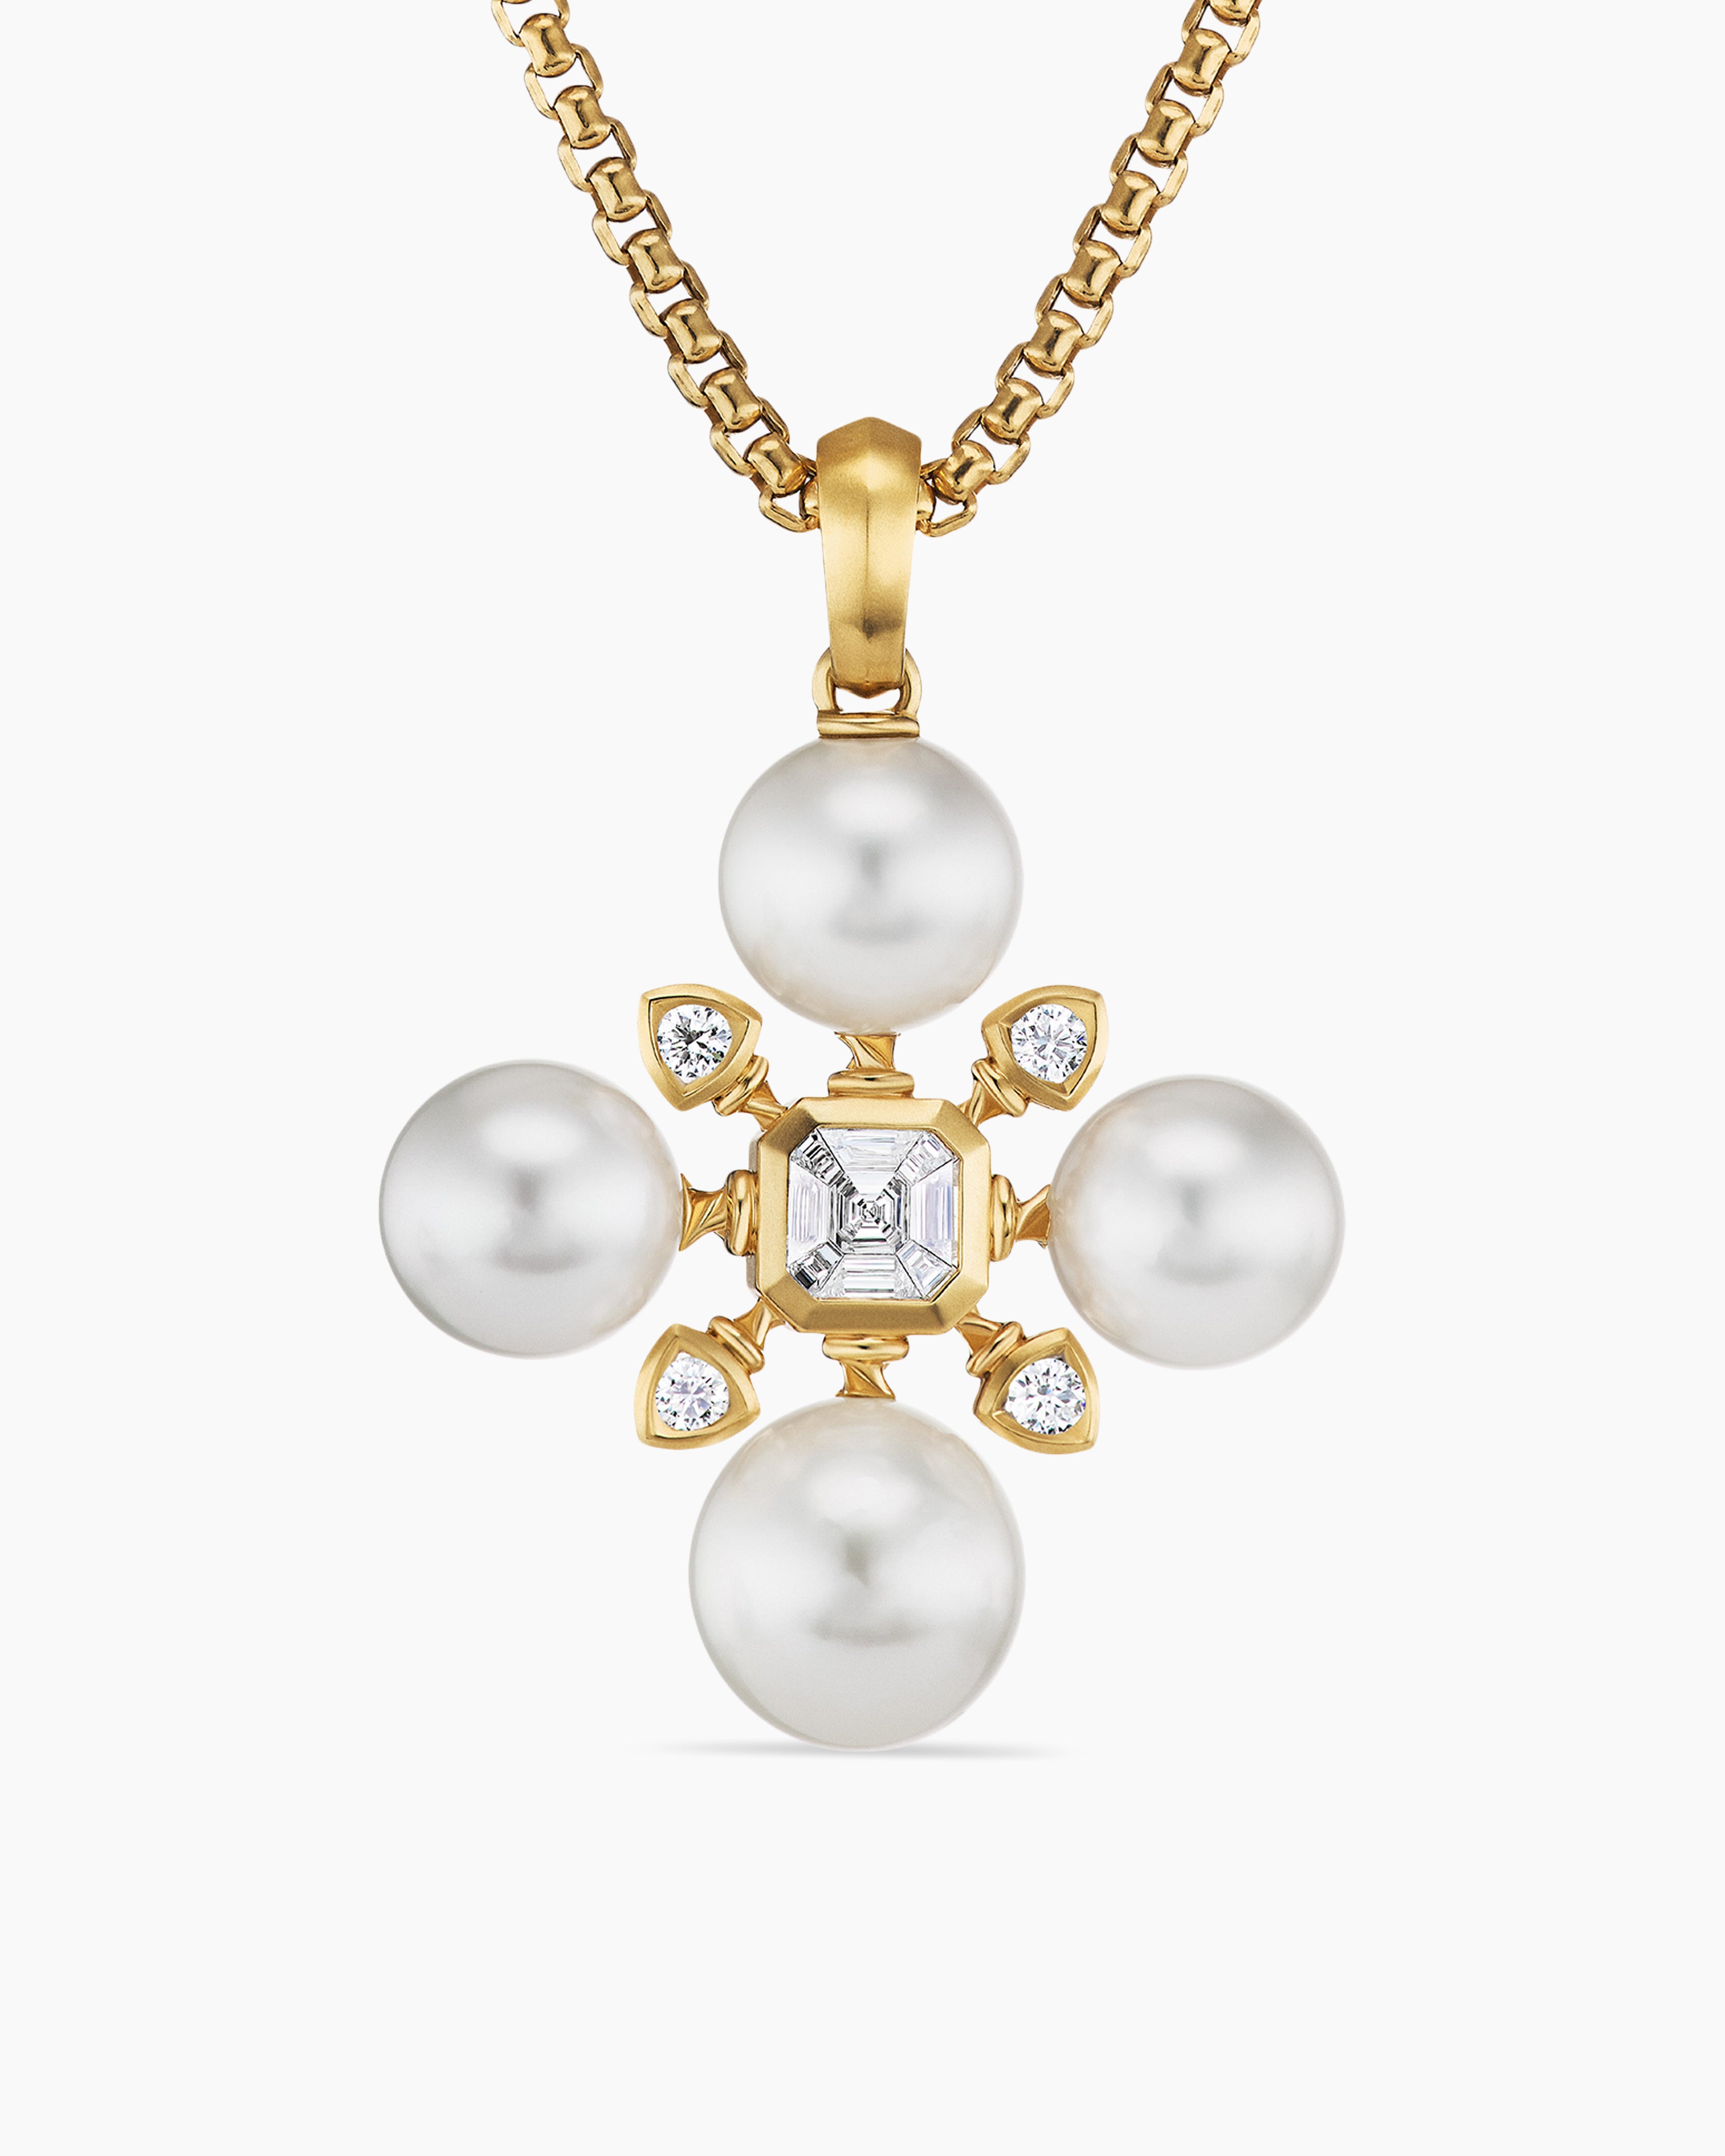 David Yurman Renaissance Pearl Pendant with 18K Yellow Gold and